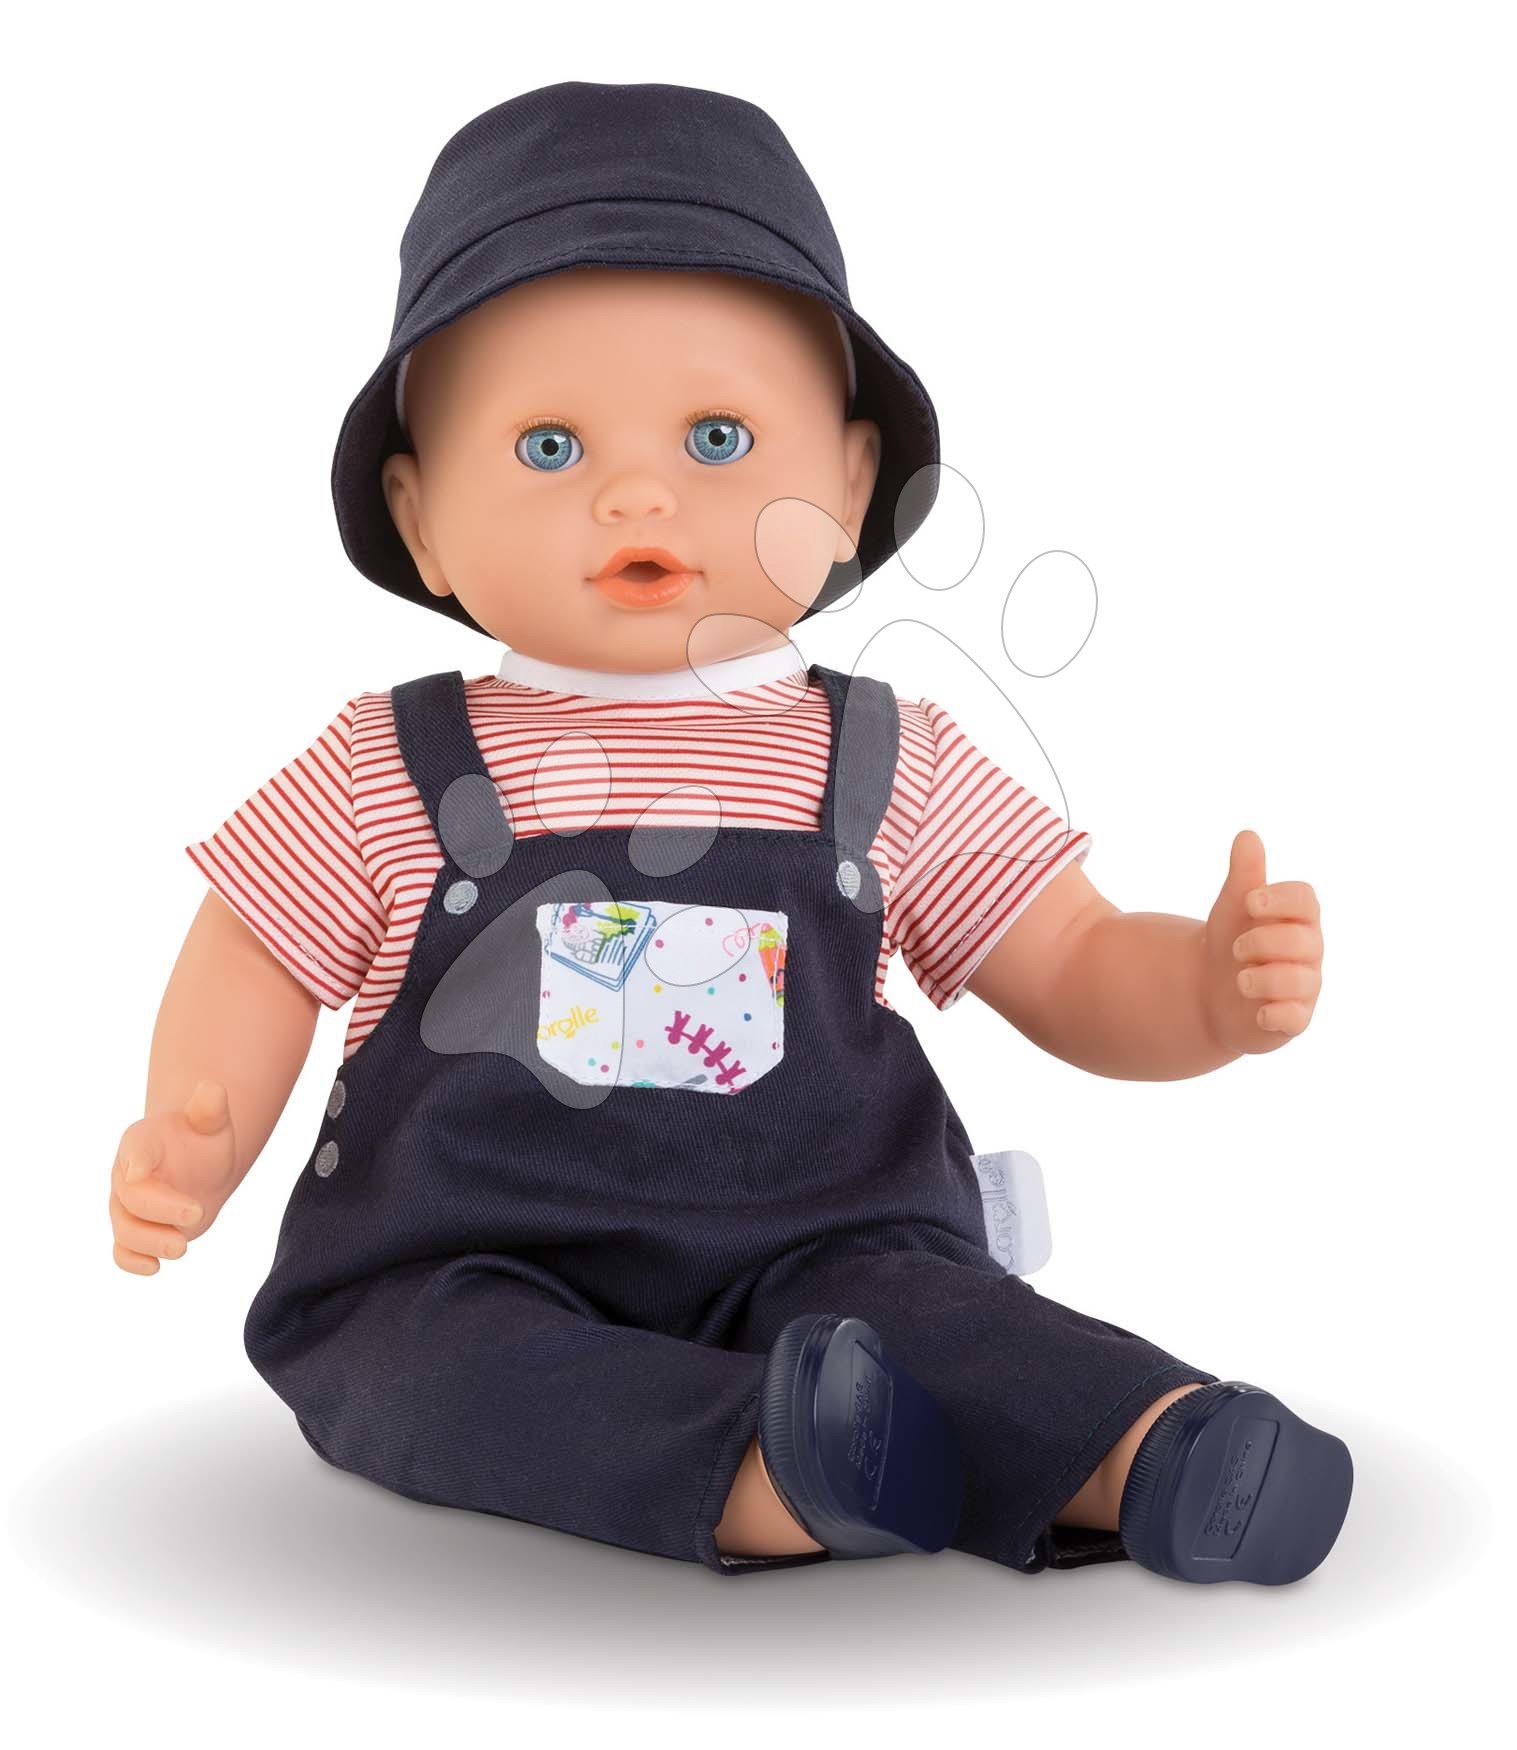 Puppen ab 24 Monaten - Puppe Augustin Little Artist Mon Grand Poupon Corolle mit blauen Augen 36 cm ab 24 Monaten